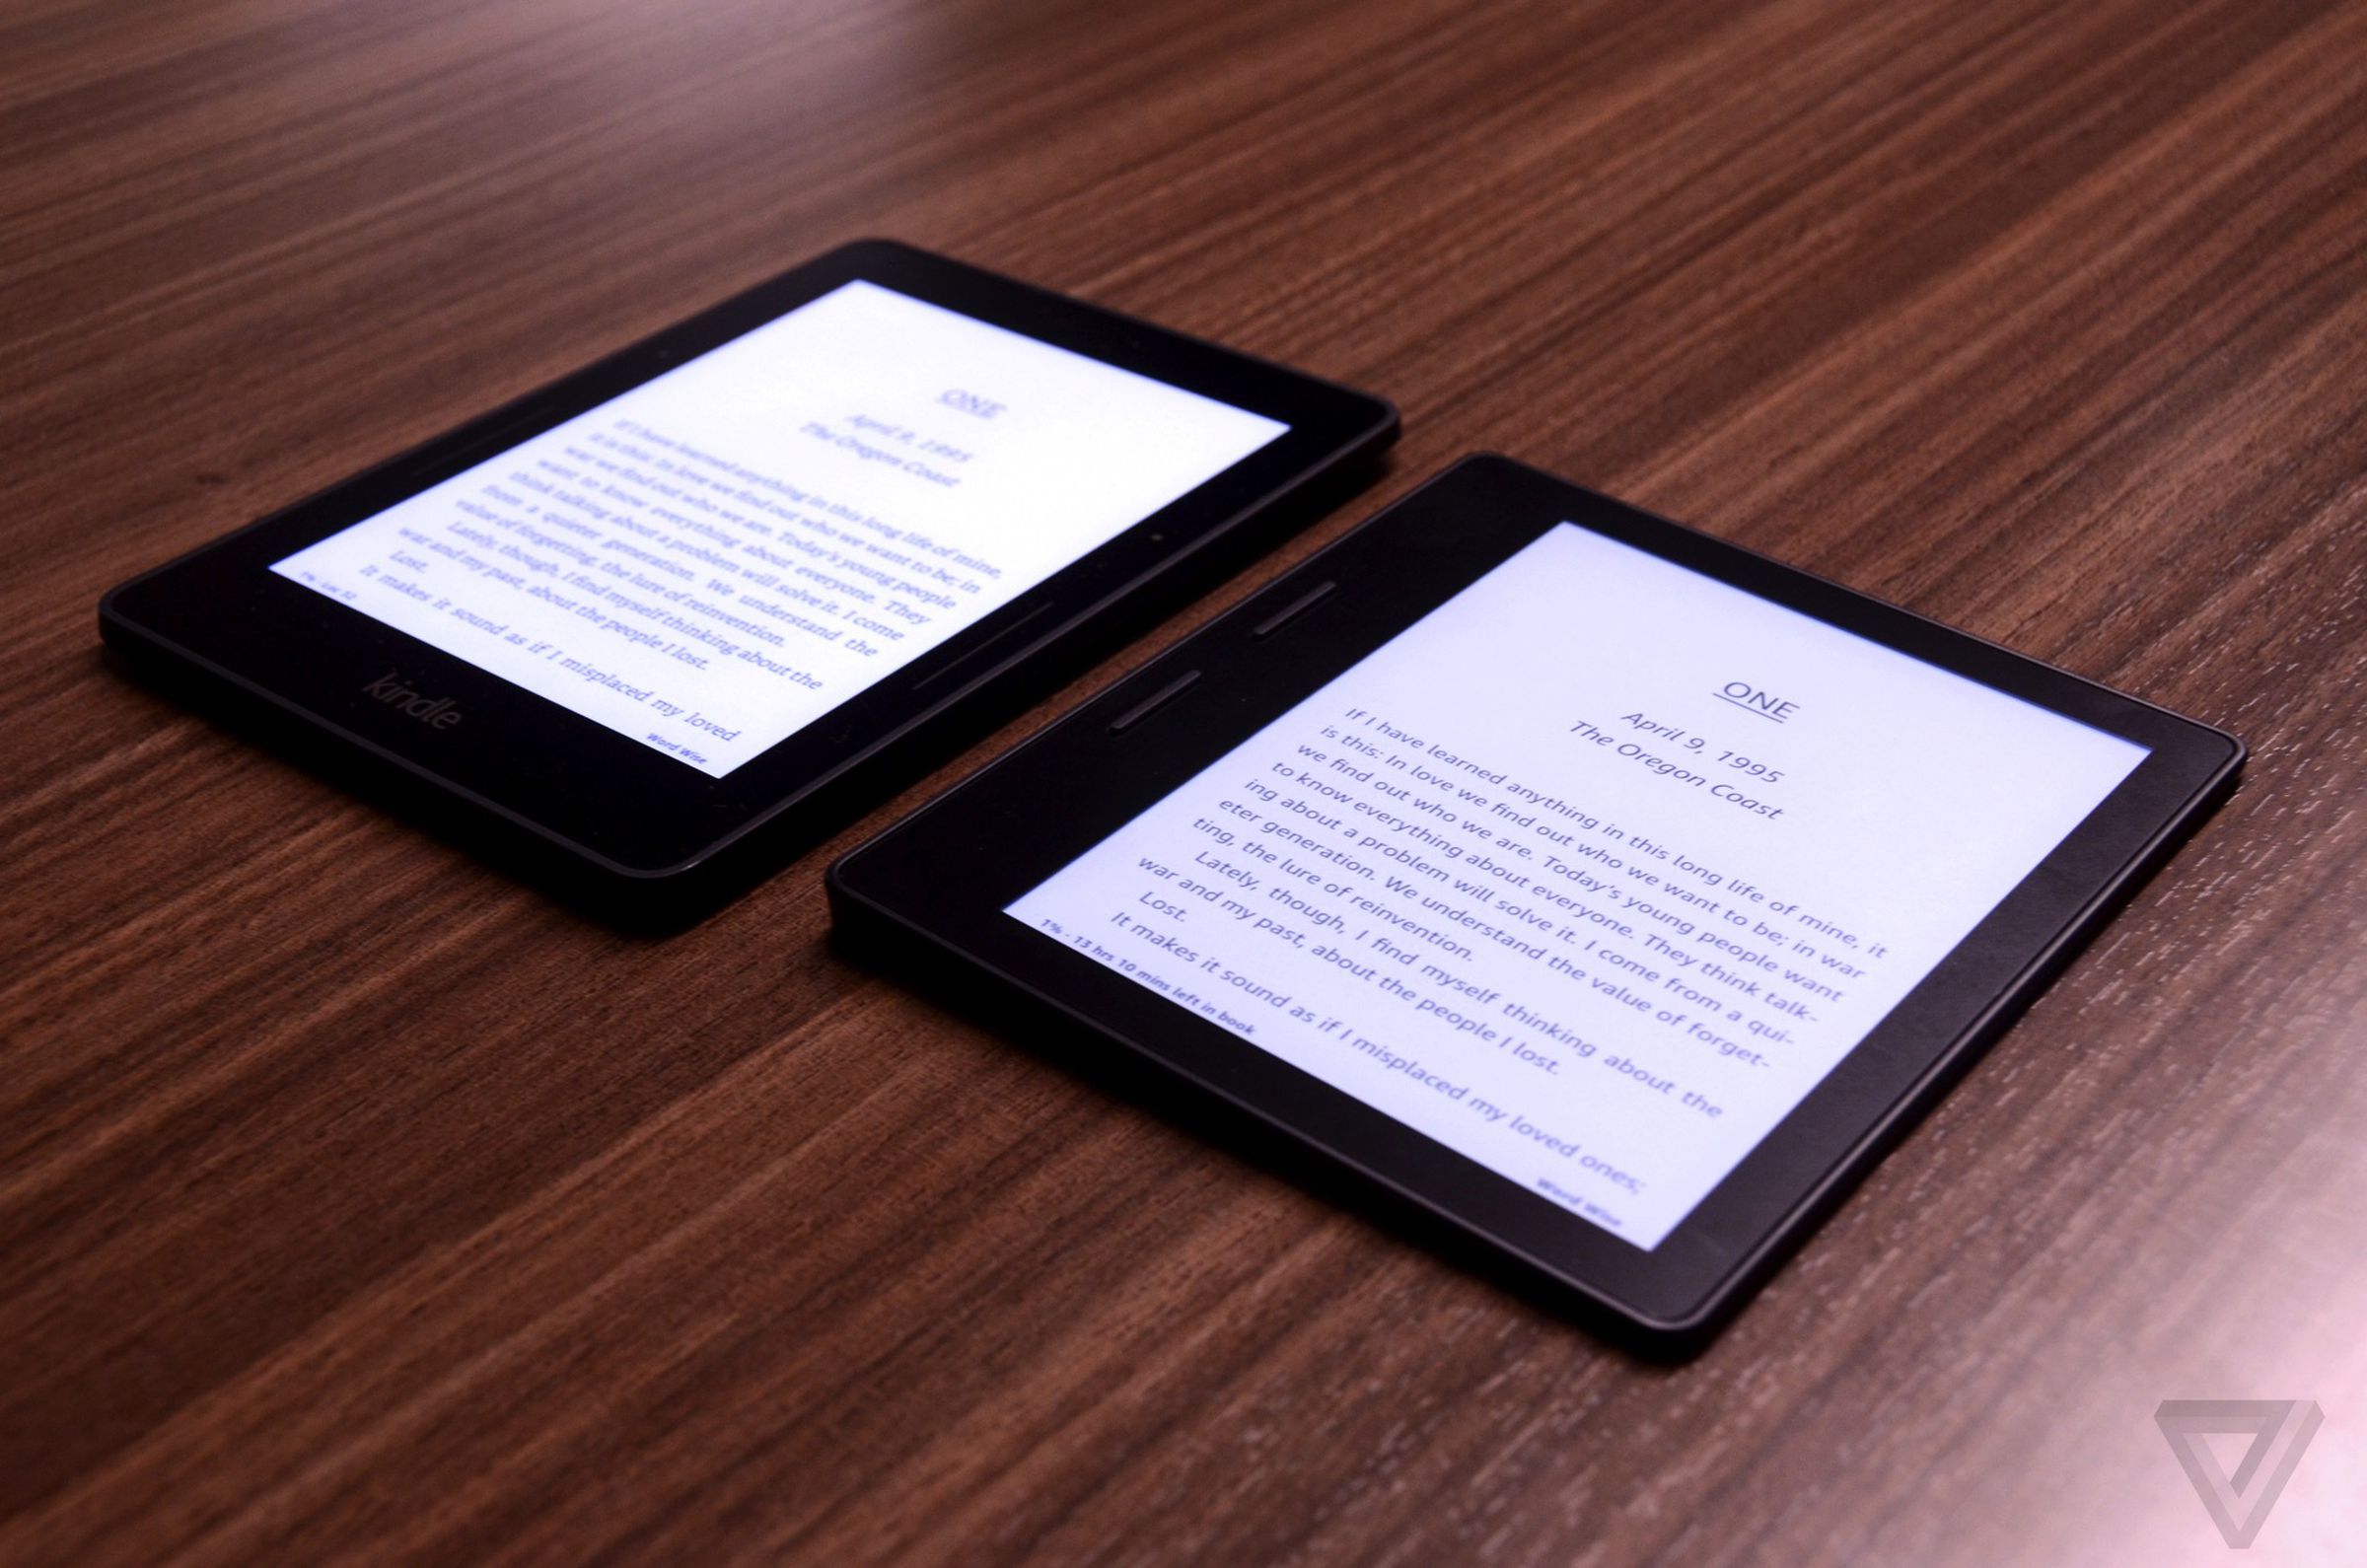 Amazon's Kindle Oasis e-reader